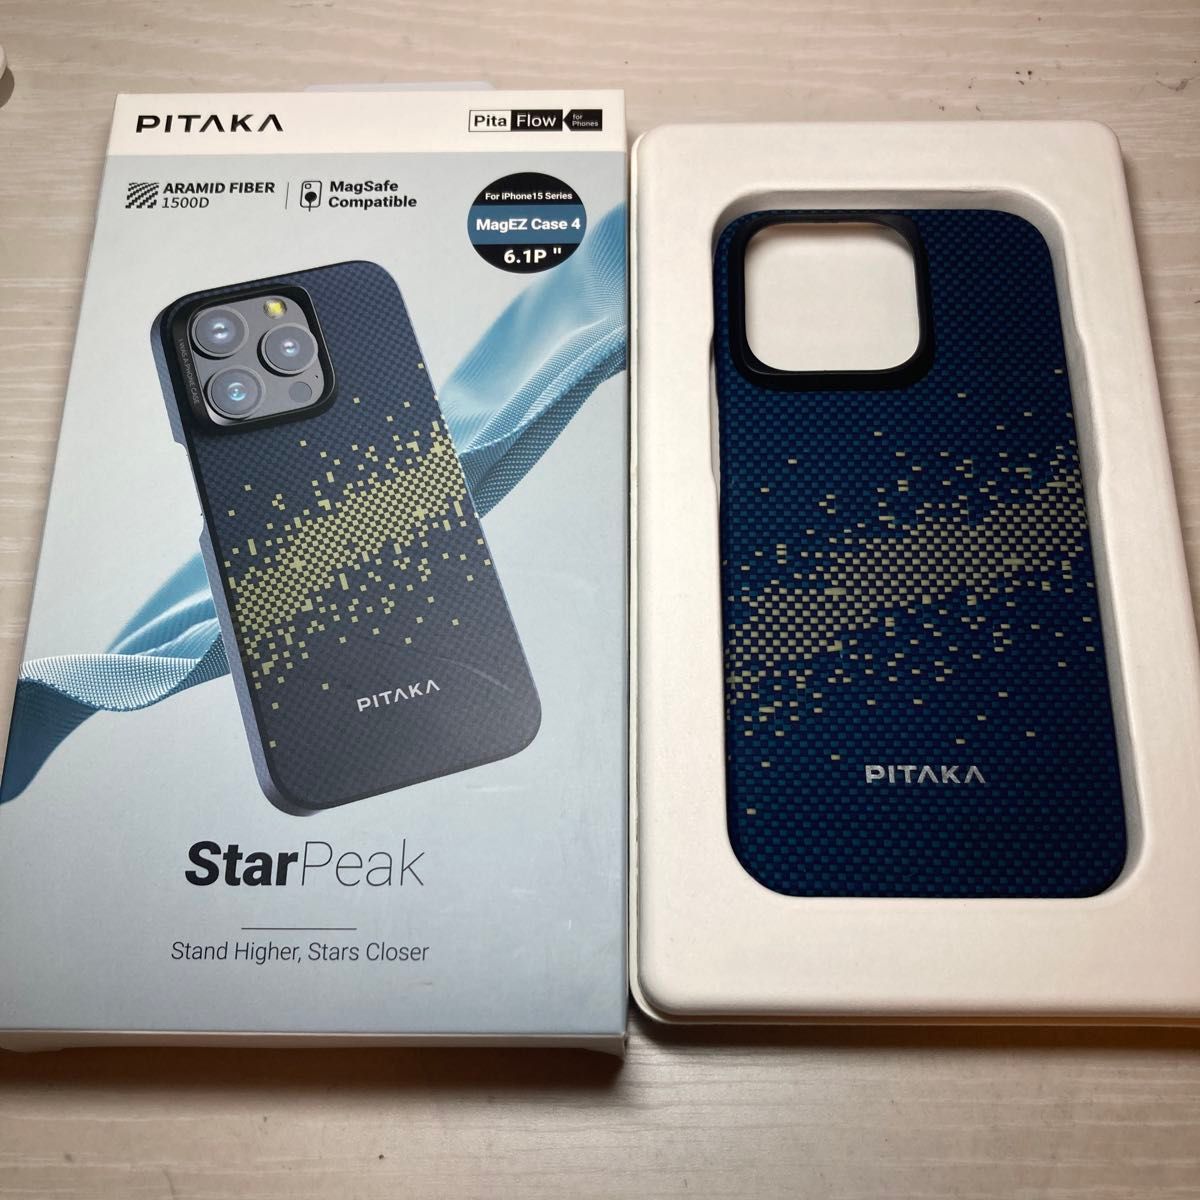 「PITAKA」 iPhone 15 Pro 用 ケース アラミド繊維製 MagSafe対応 超極薄・超軽量  (1500D 星）